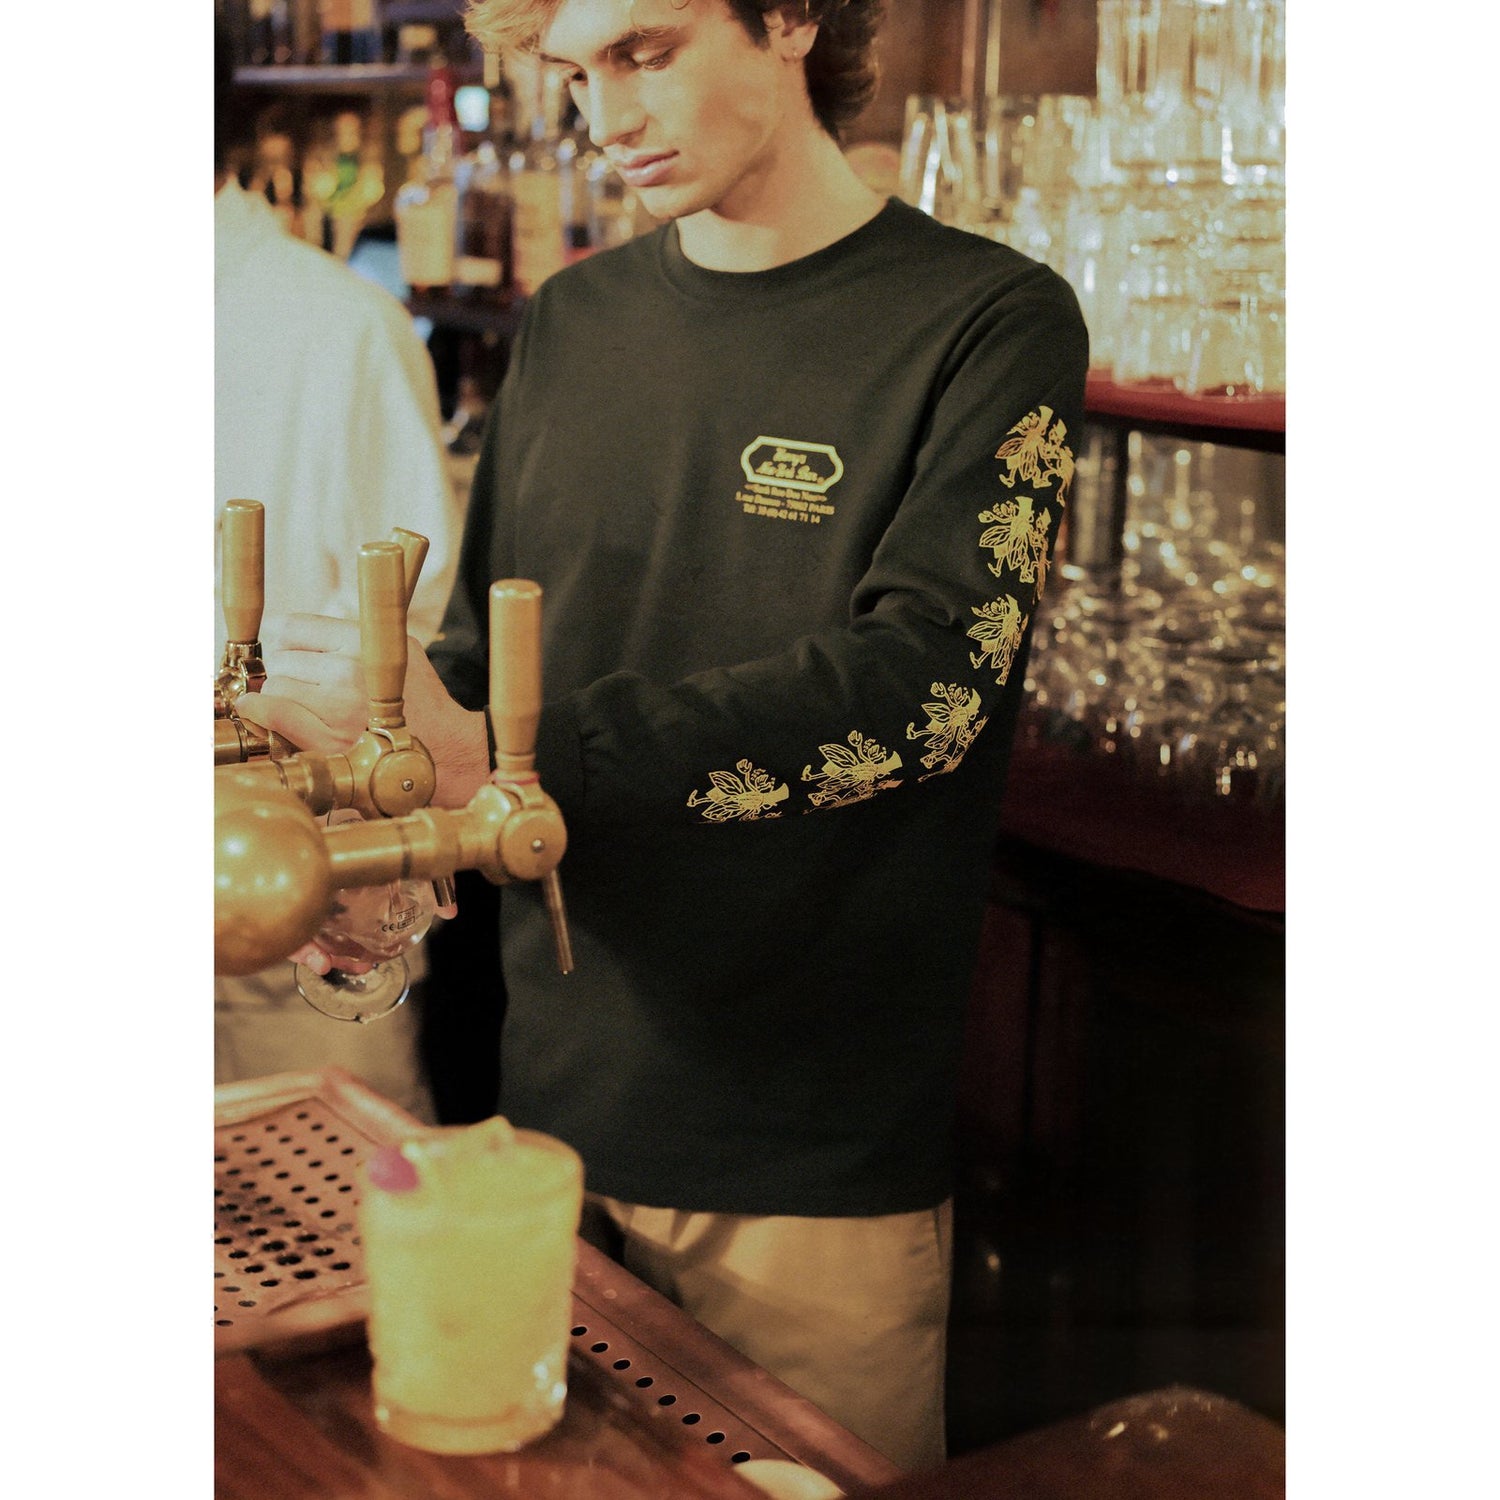 Bartender wearing the Harry's New York Bar Long Sleeve Tee.